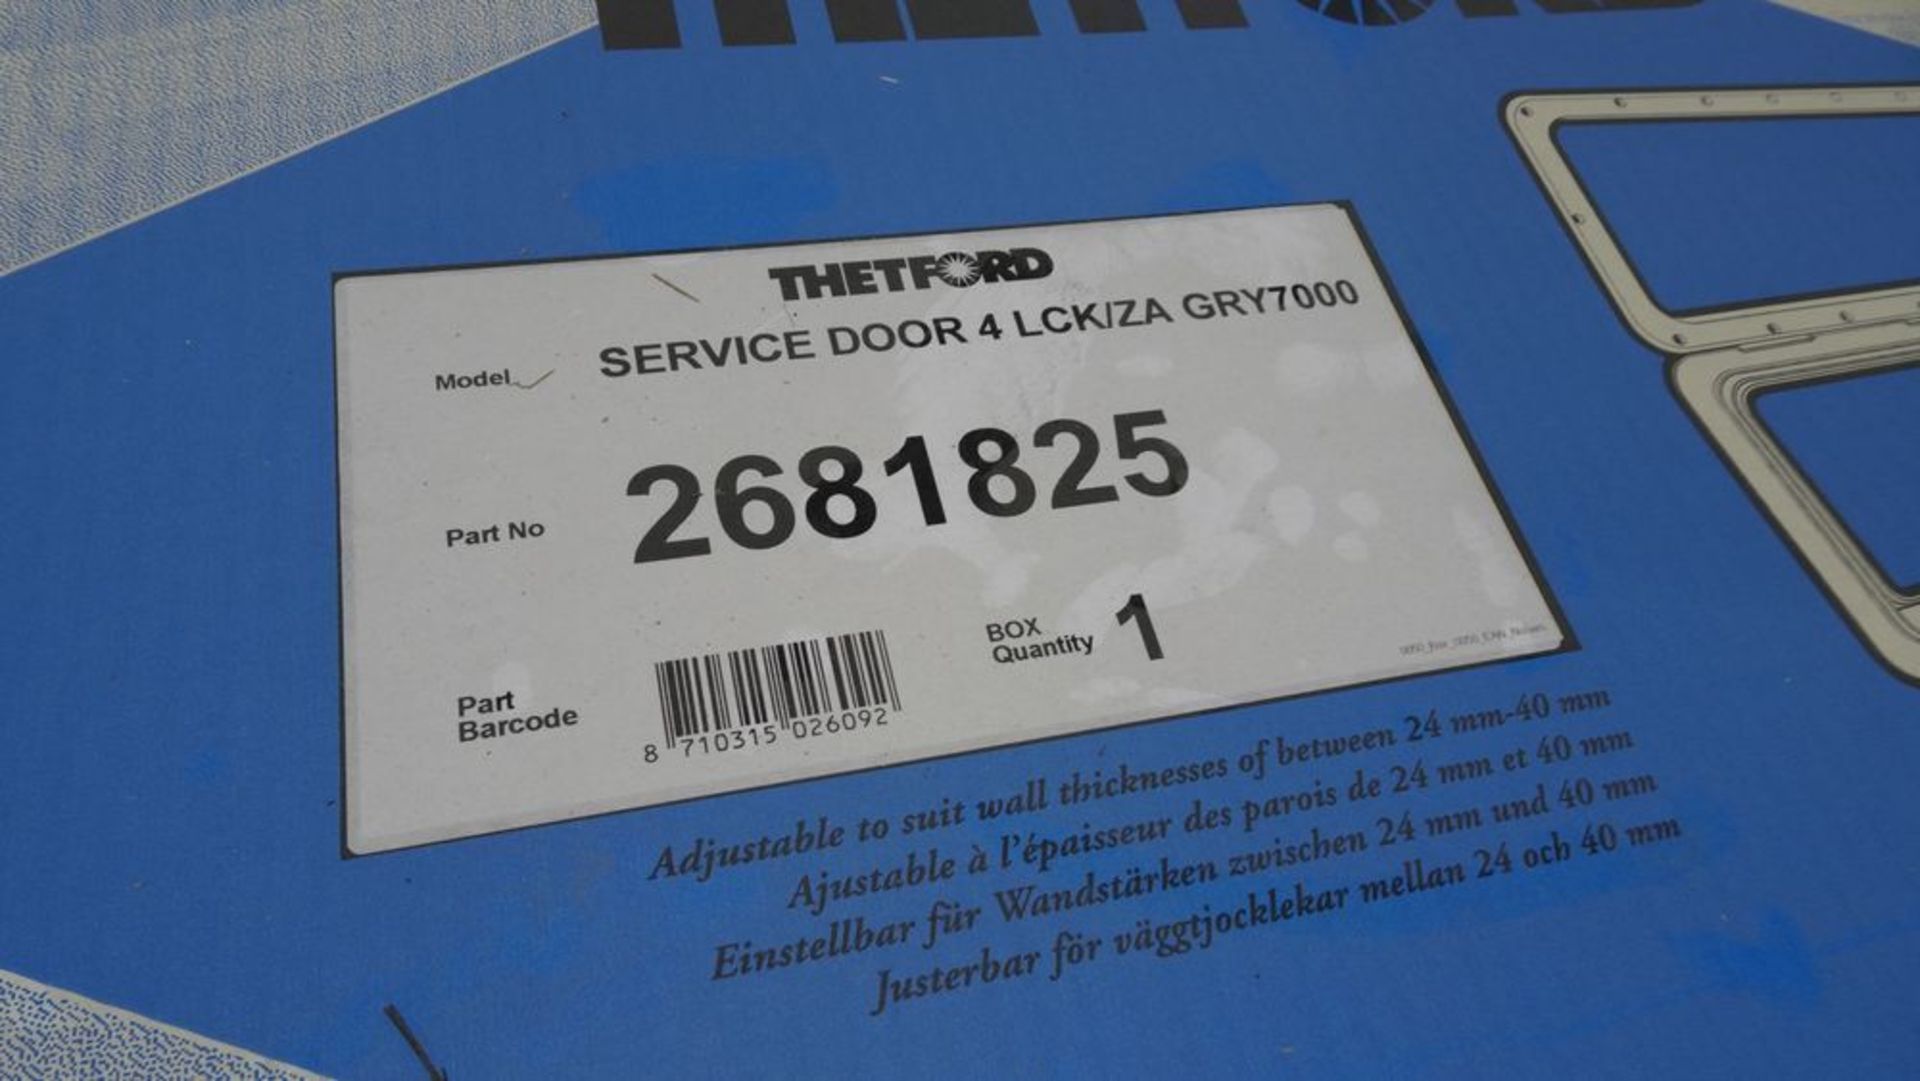 THETFORD 2681825 SERVICE DOORS (REUTER) - Image 3 of 3